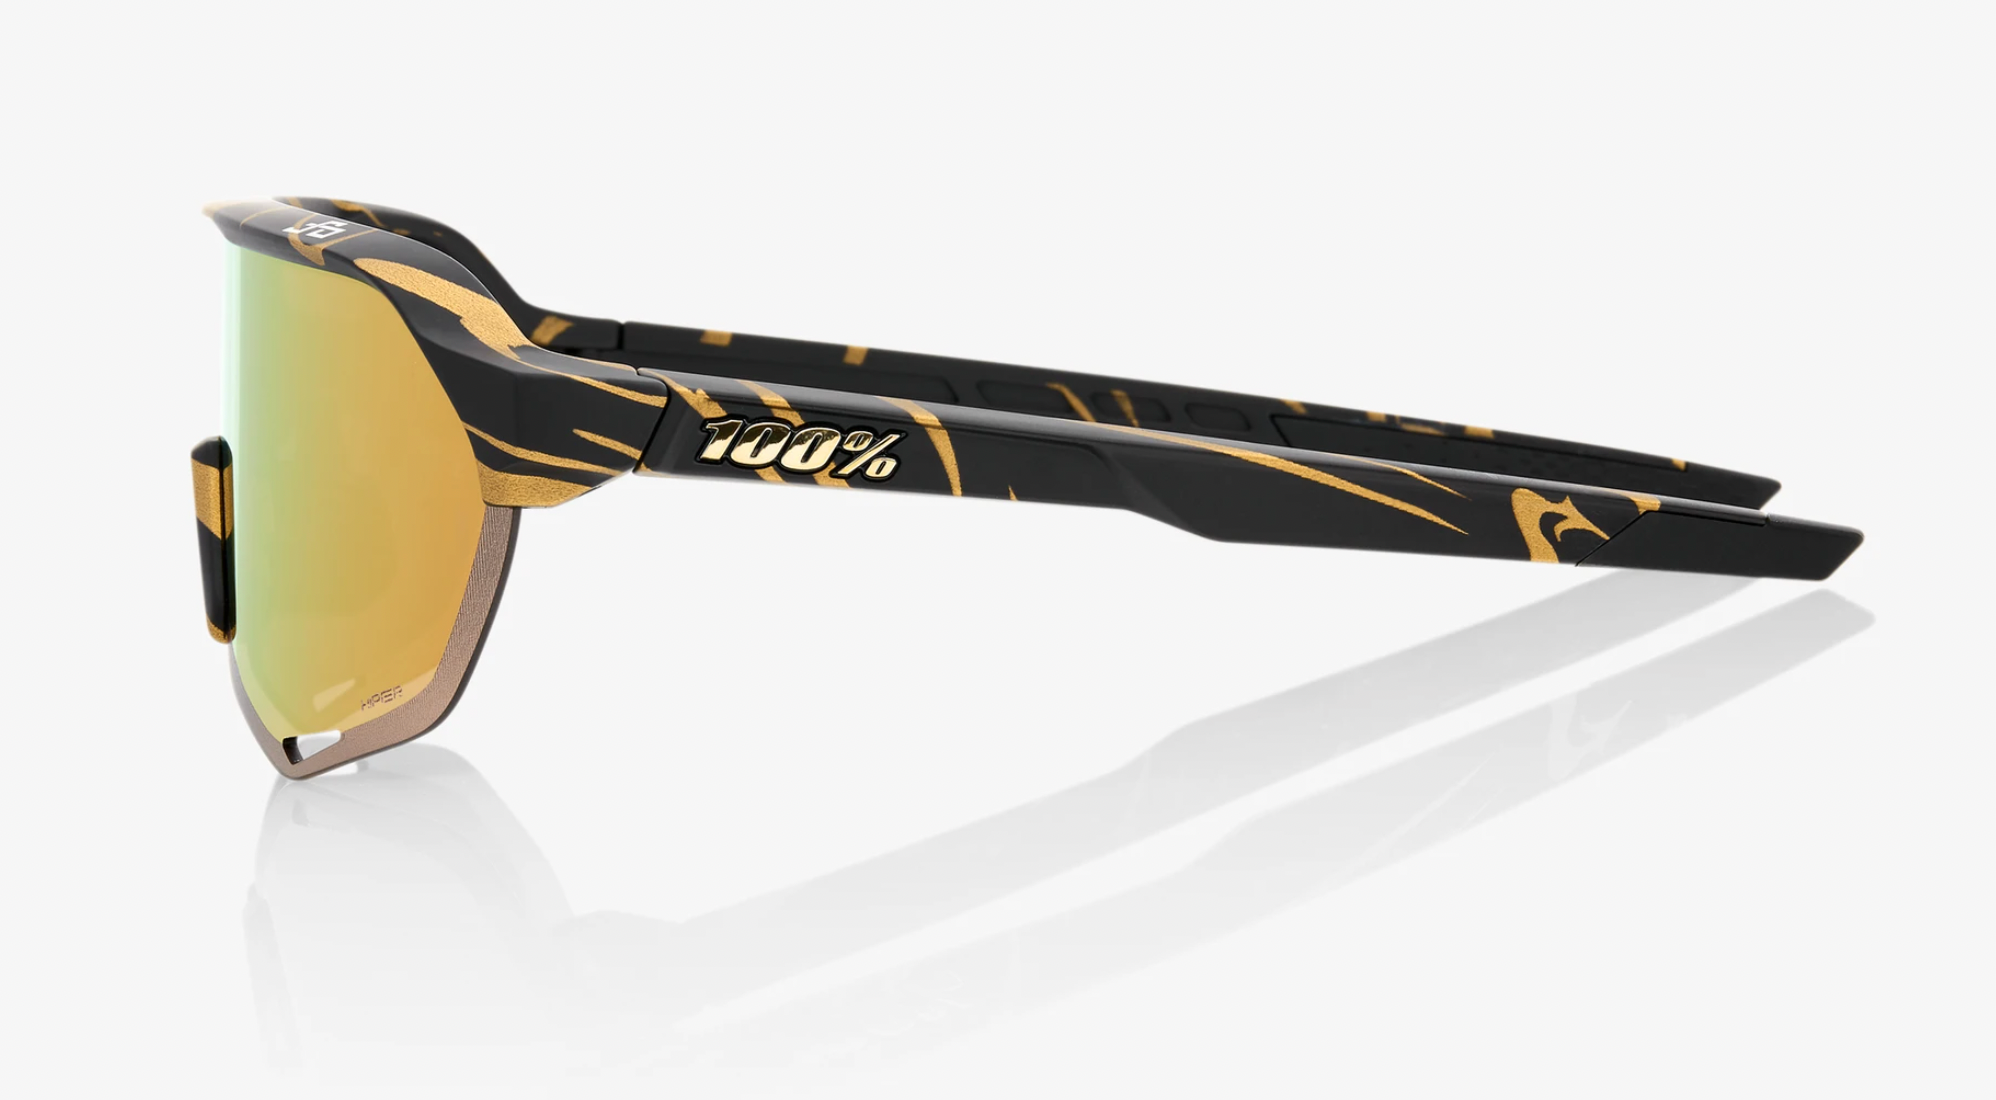 Ride 100% S2 Peter Sagan Limited Edition Sunglasses Metallic Gold